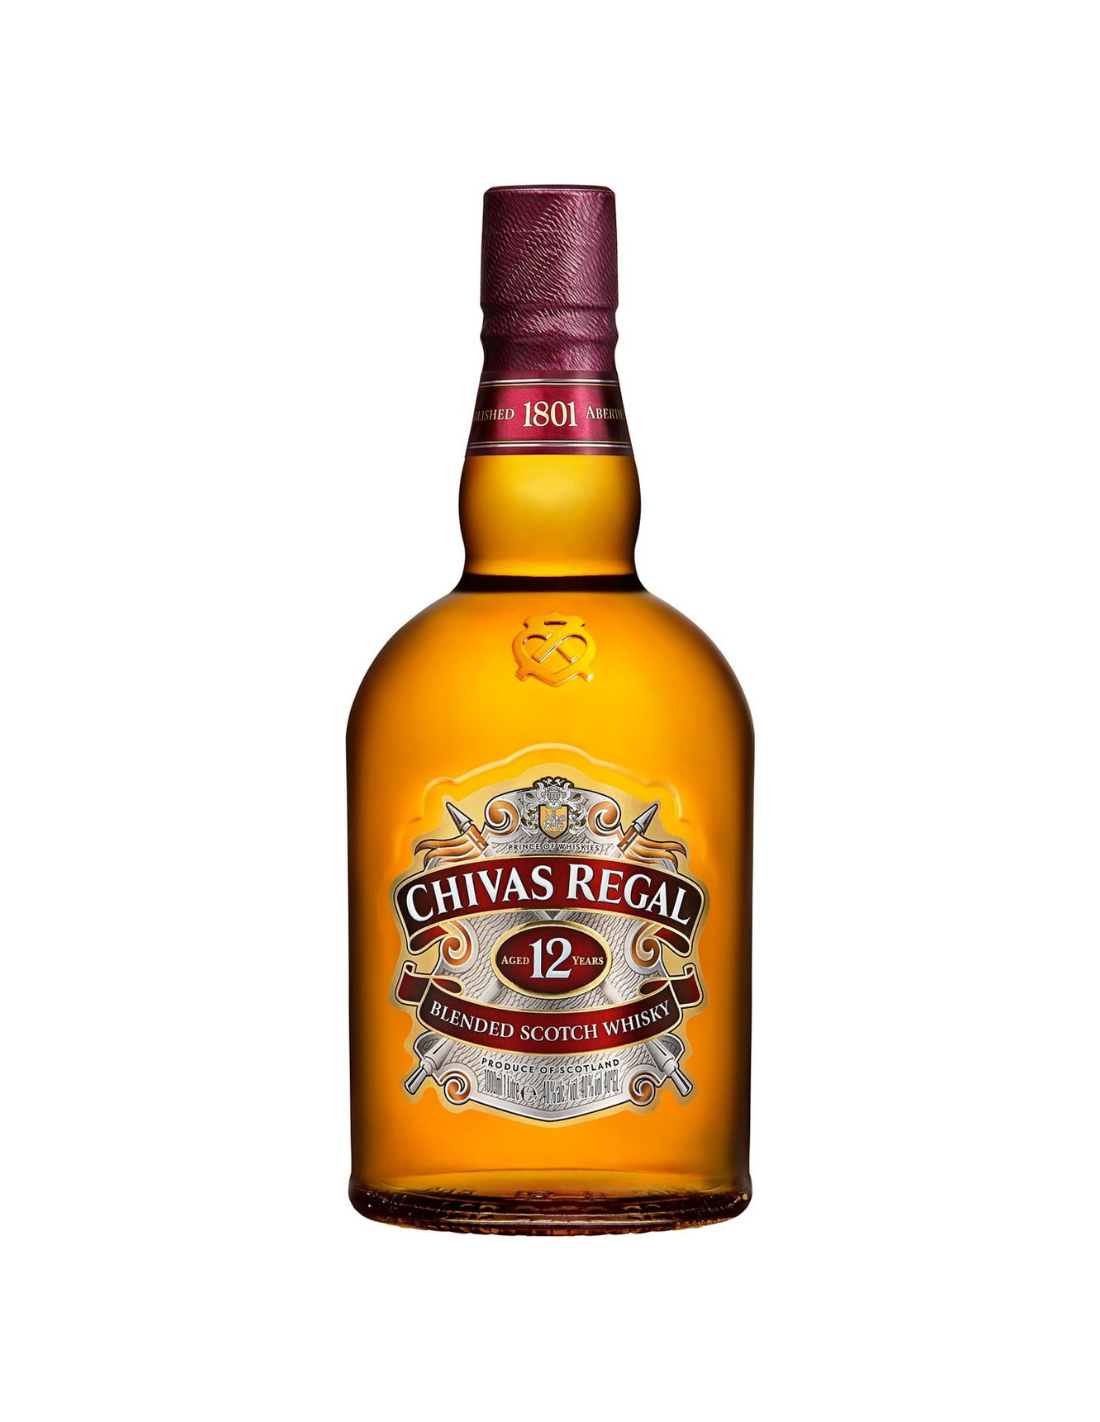 Whisky Chivas Regal, 0.7L, 12 ani, 40% alc., Scotia alcooldiscount.ro